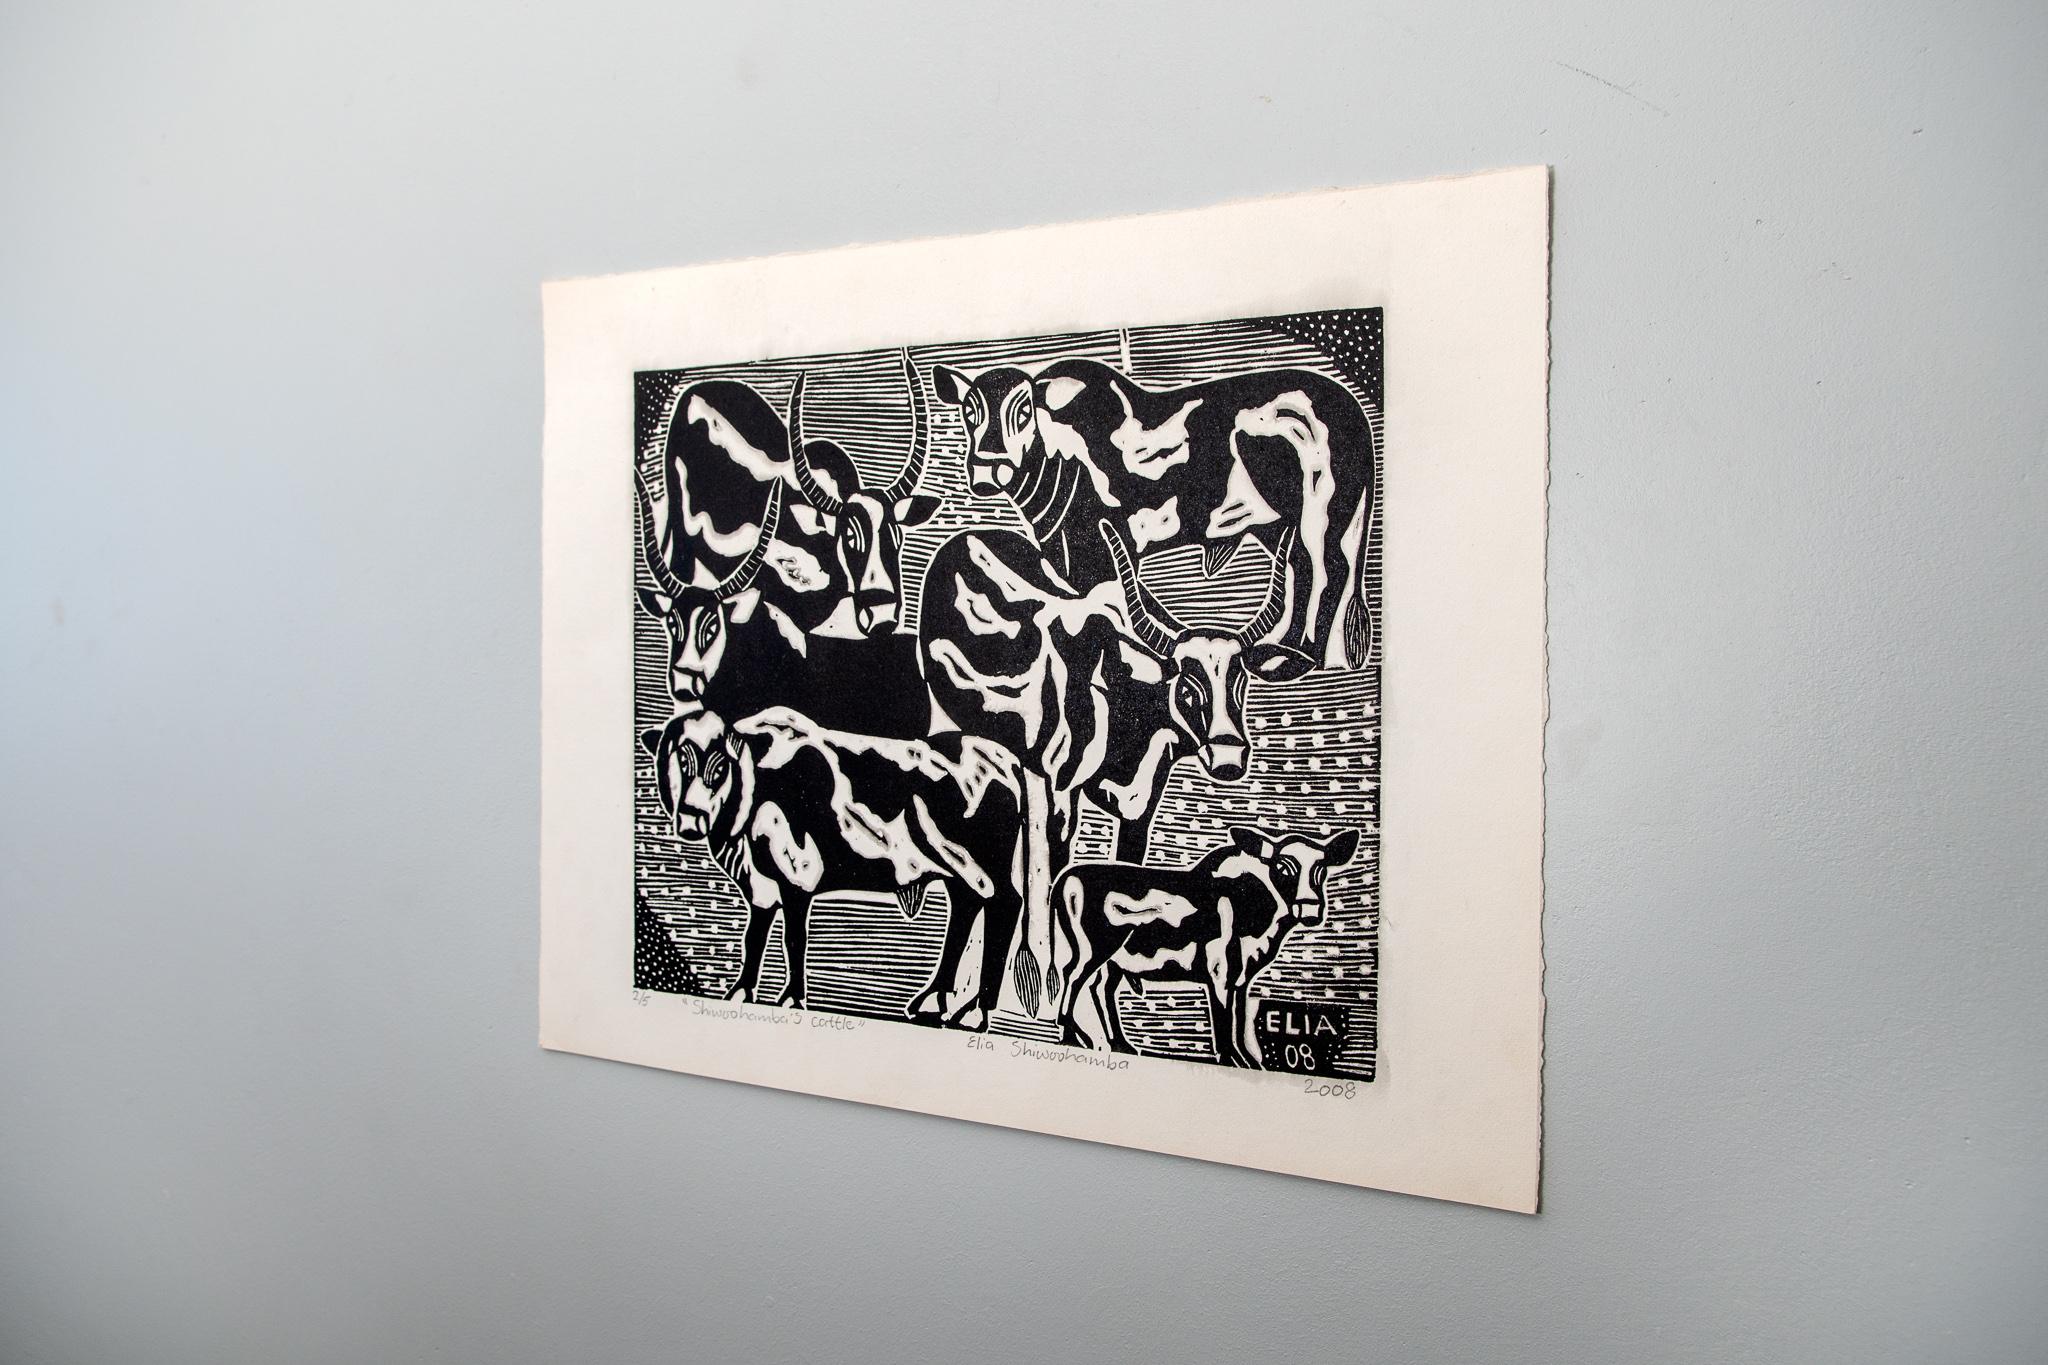 Shiwoohamba's Cattle, Elia Shiwoohamba, Linoleum block print on paper 1